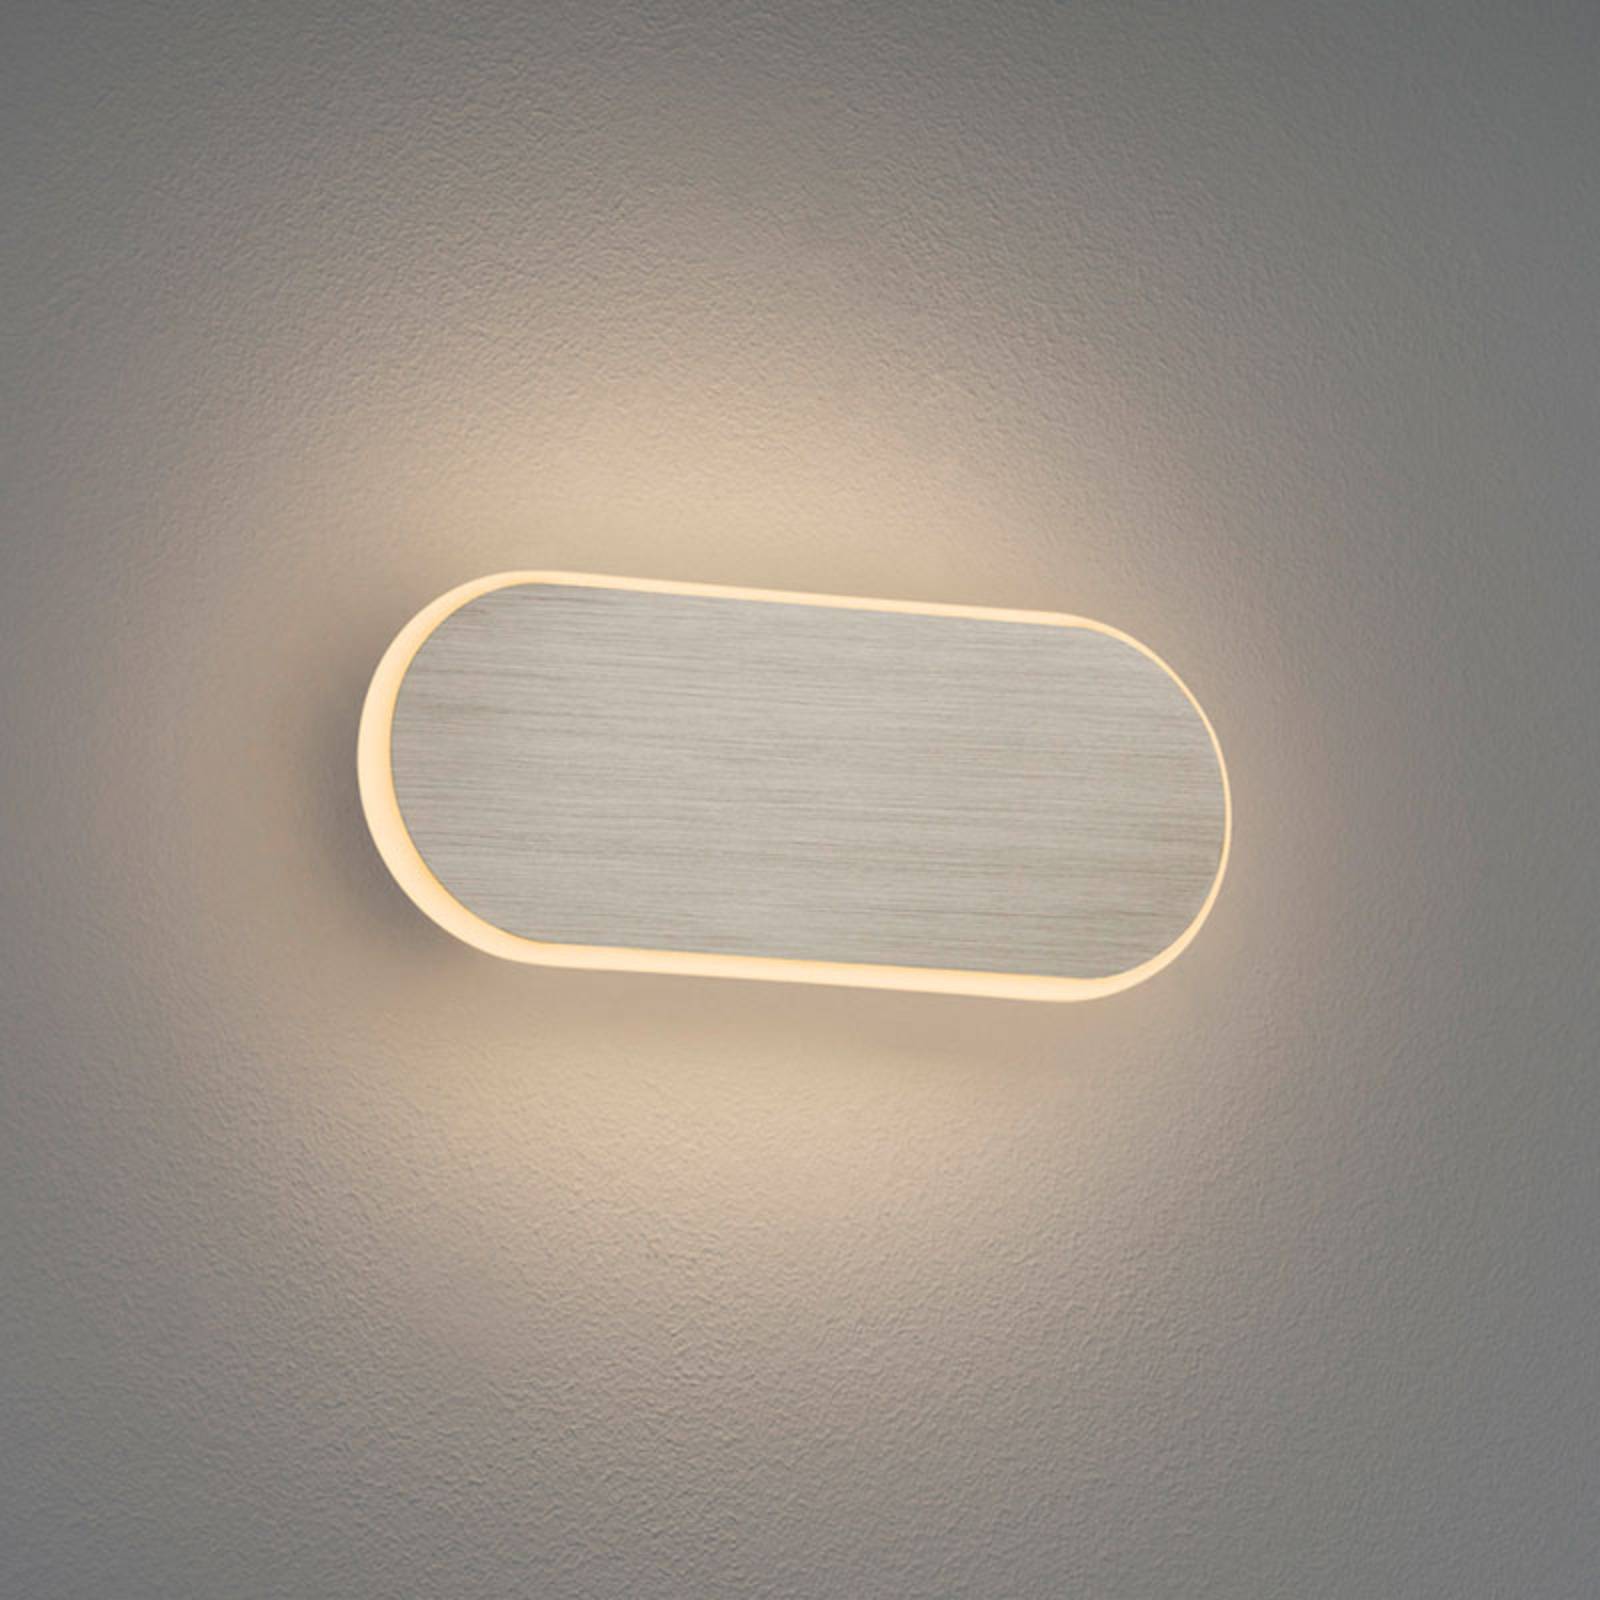 Carlo LED-væglampe, Switchdim, 20 cm, mat nikkel (4017807468823)